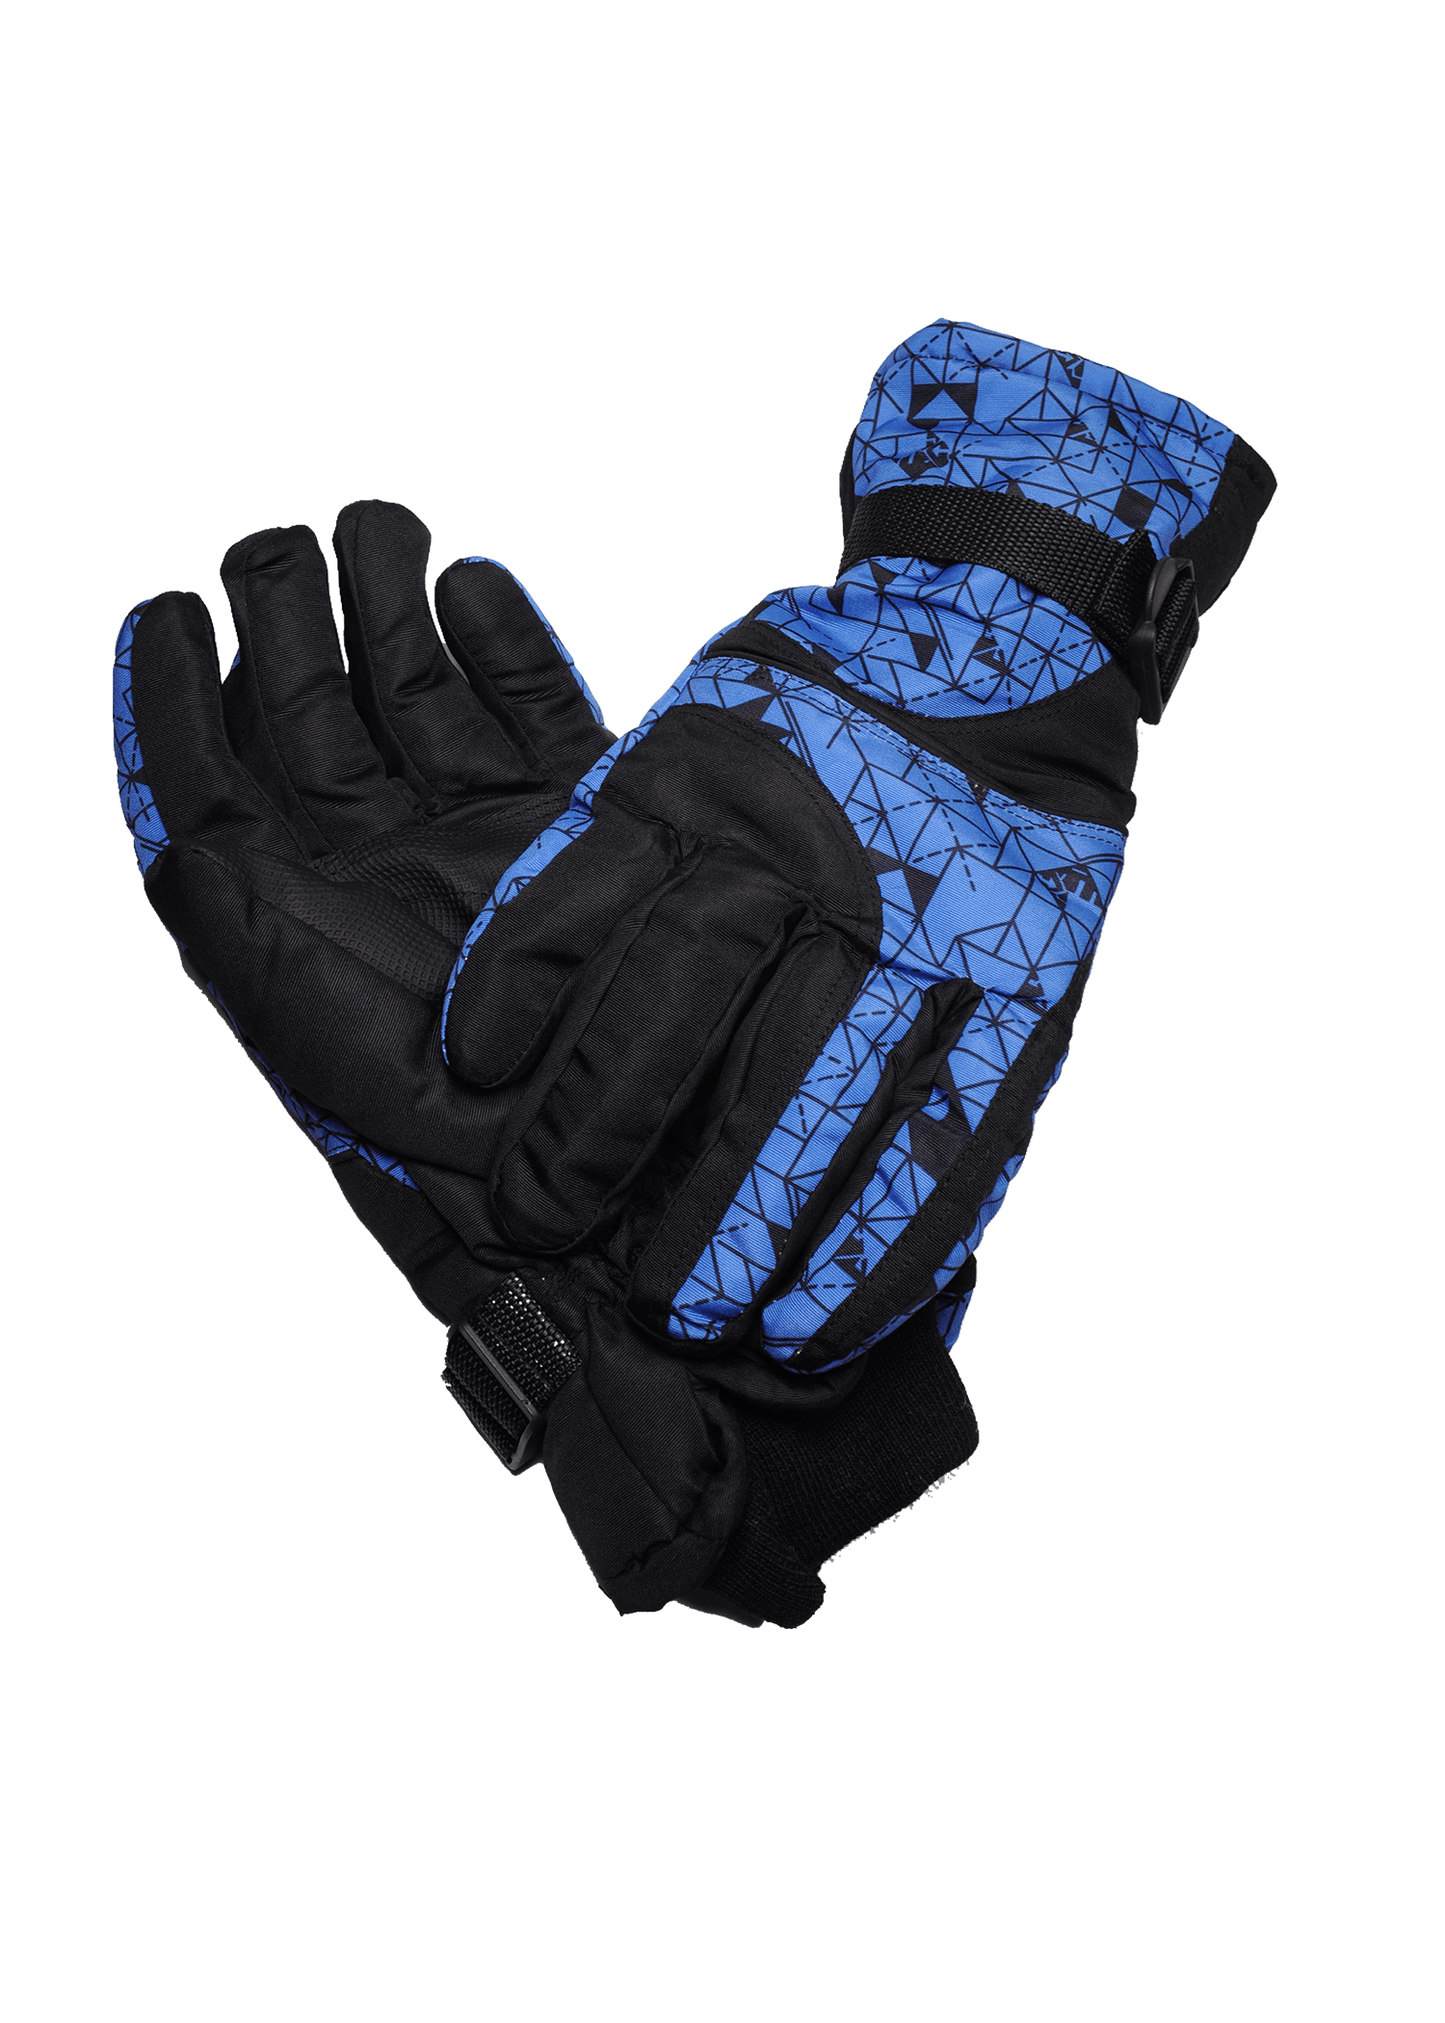 Men's Winter Ski Gloves